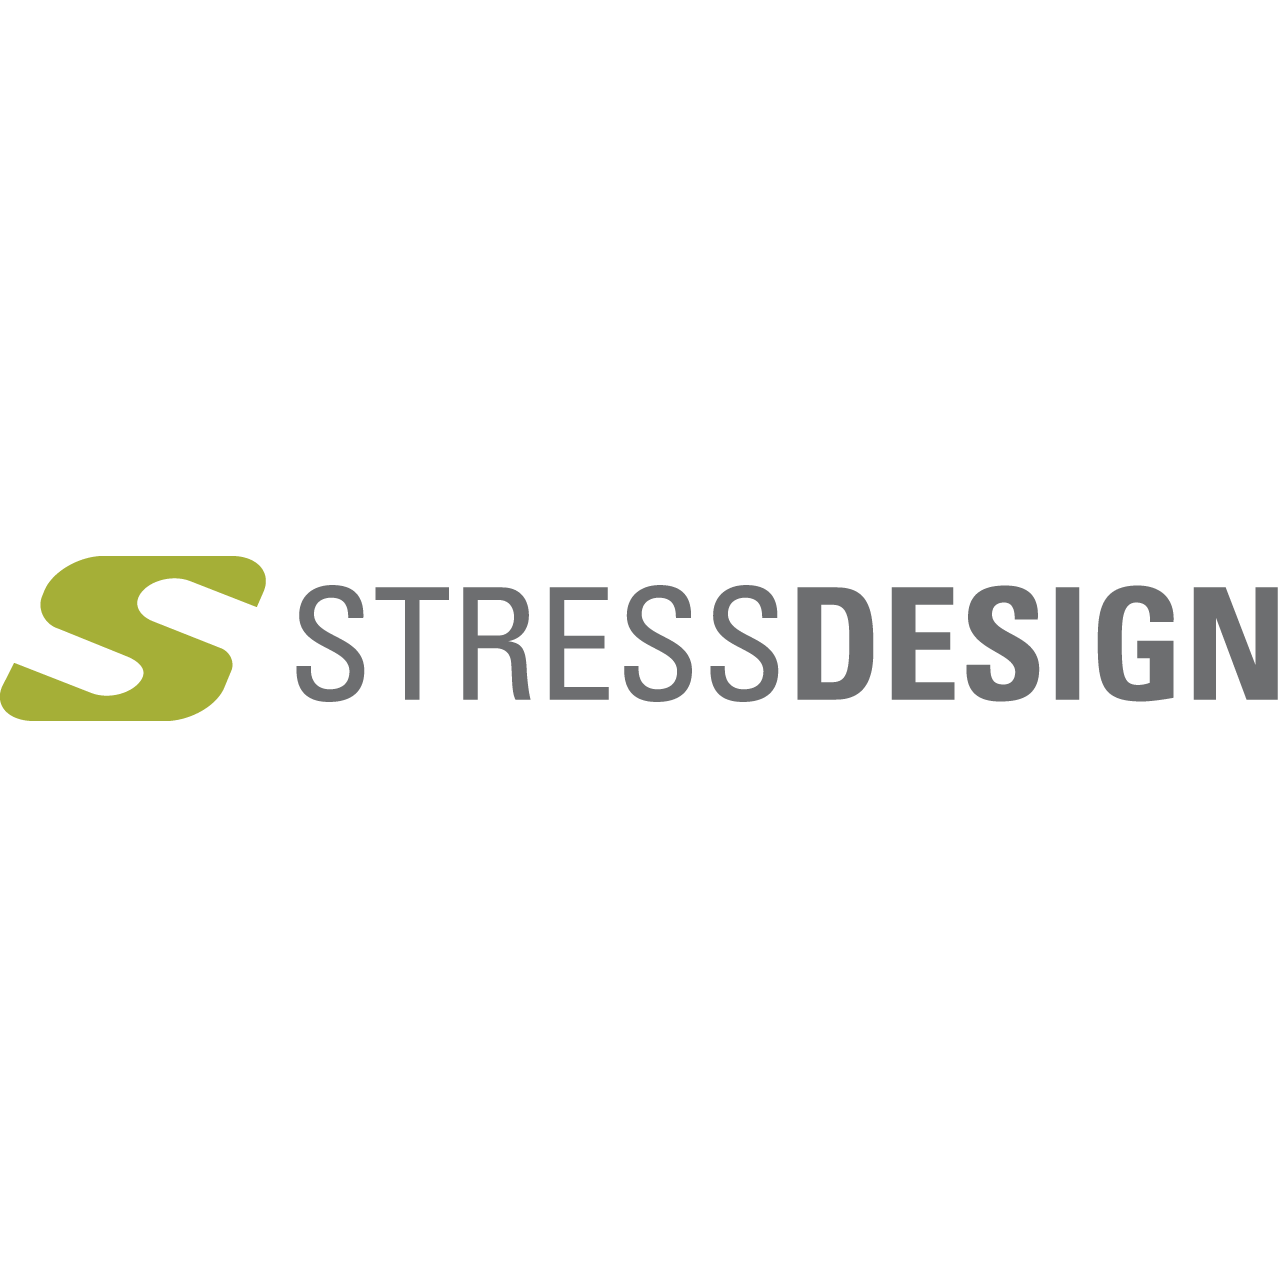 Stressdesign Logo